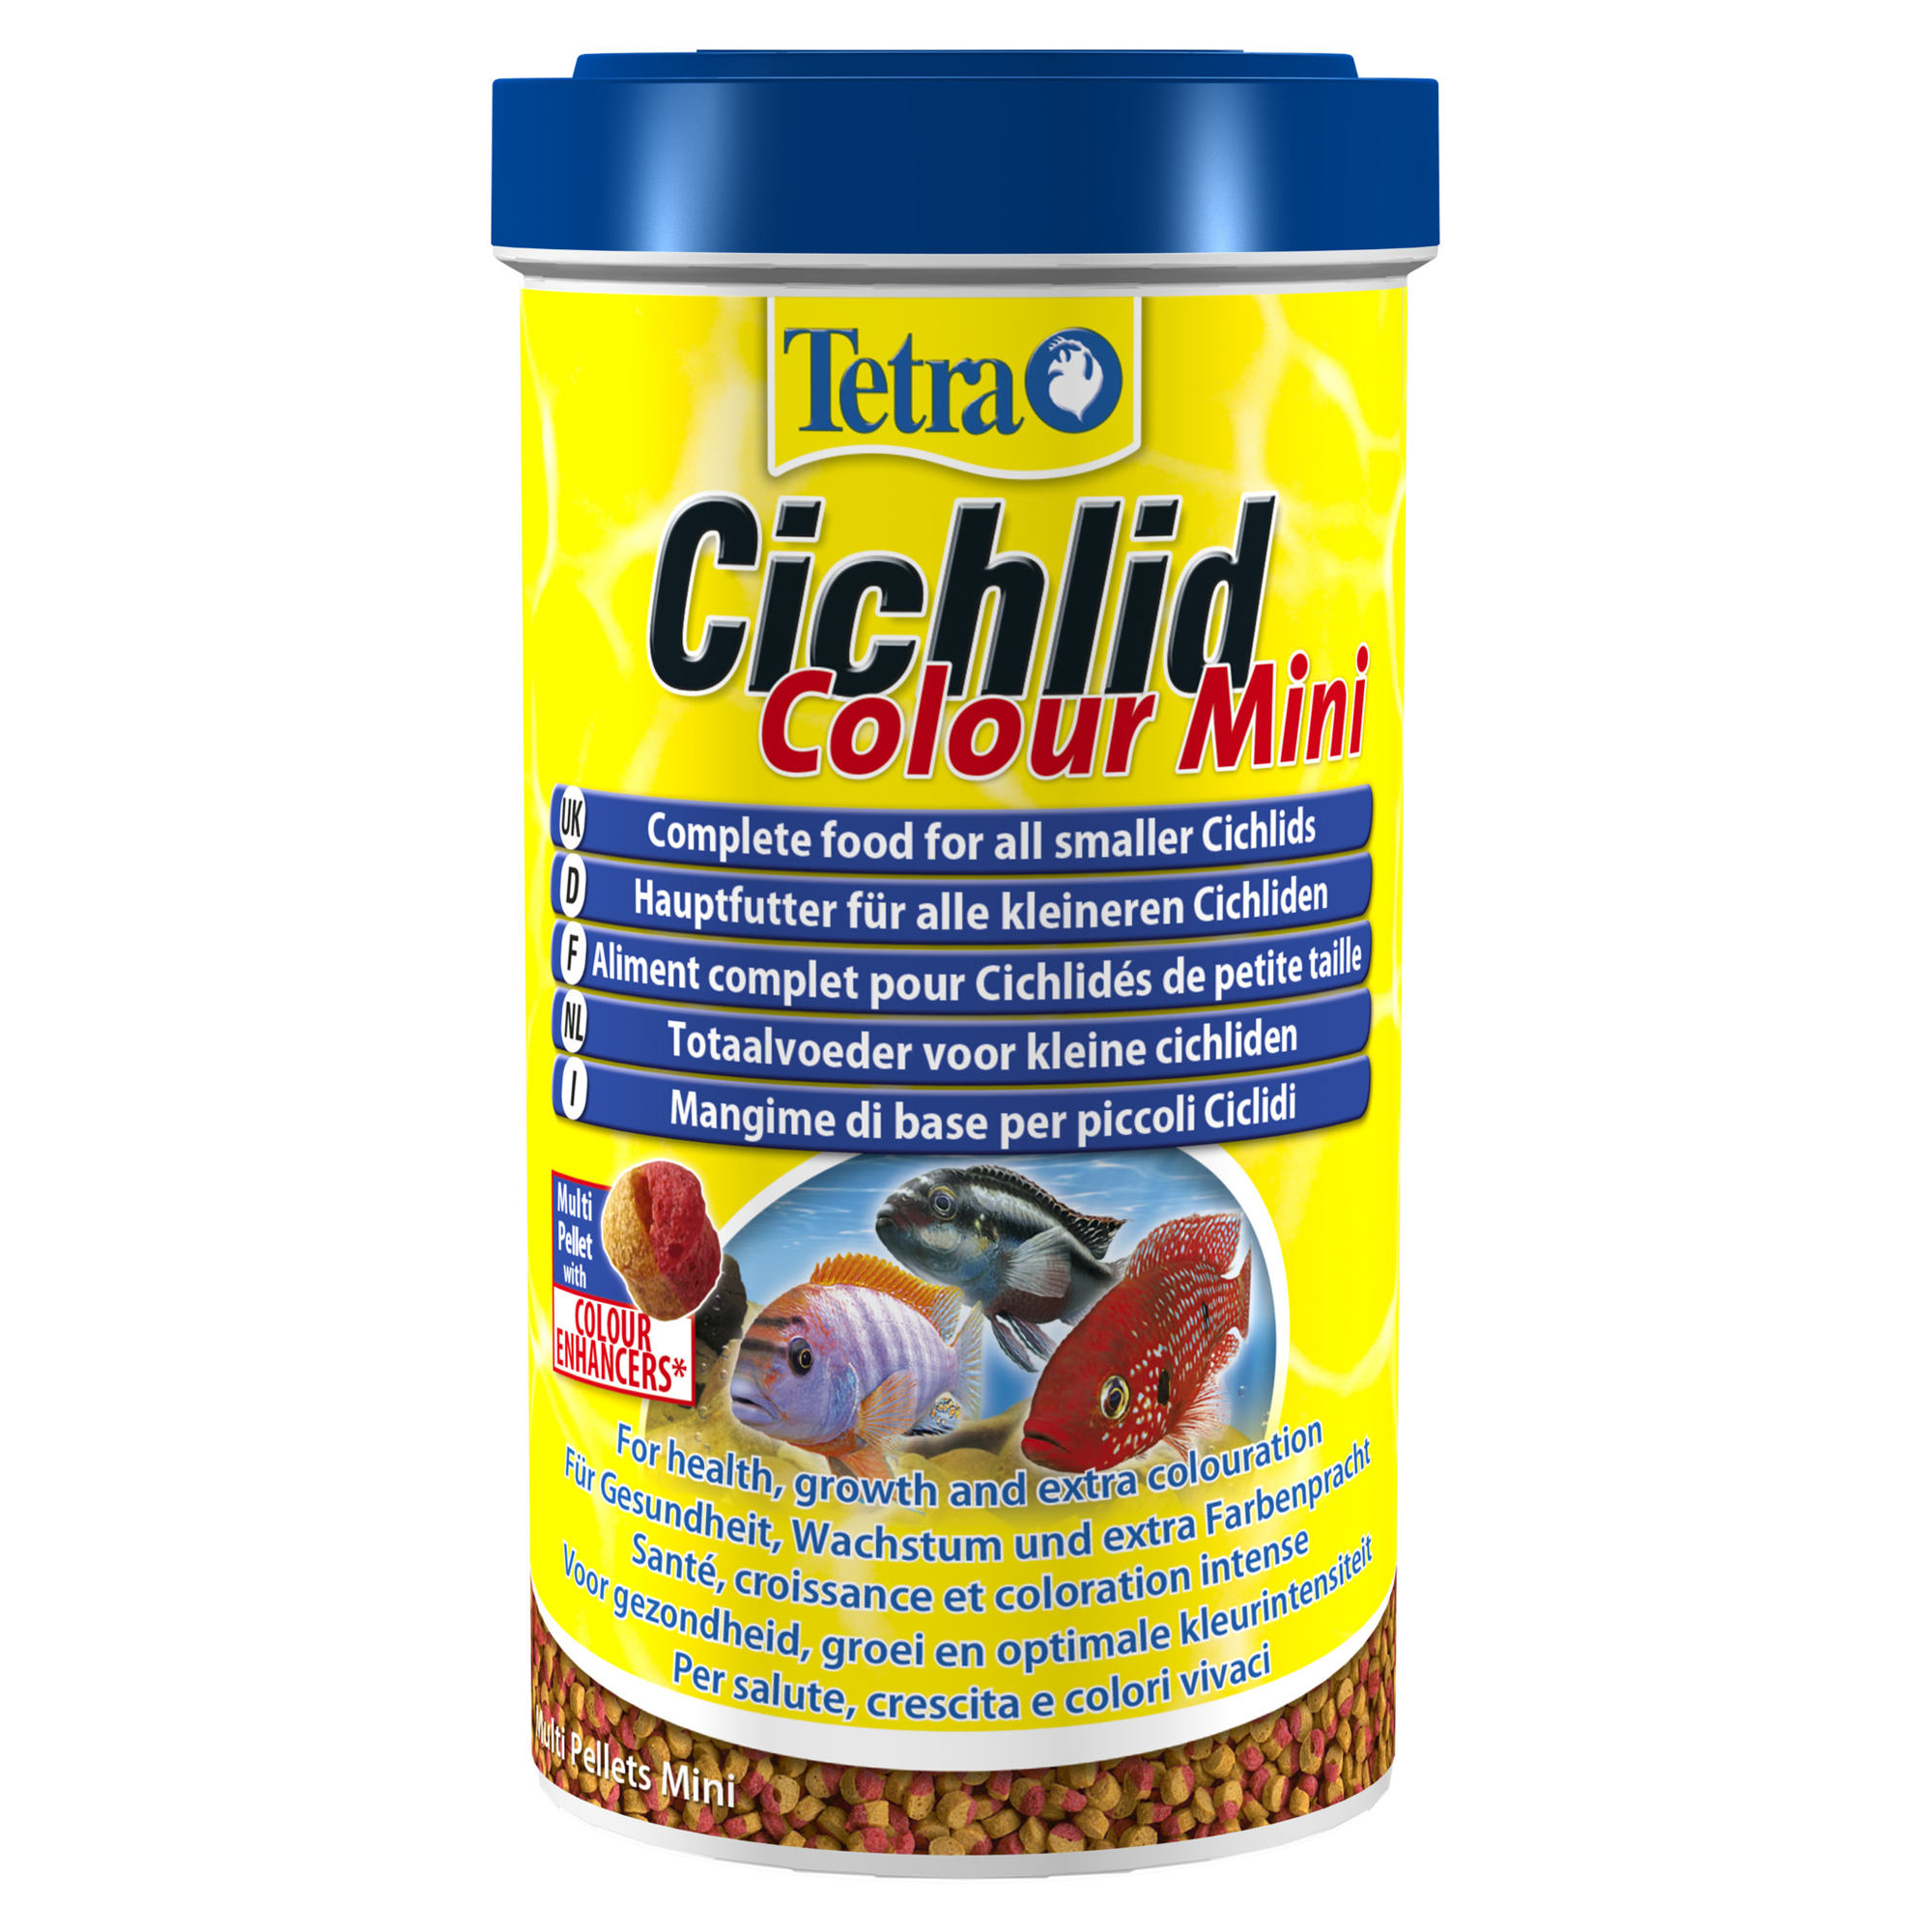 Fischfutter Cichlid Colour Mini 170 g + product picture